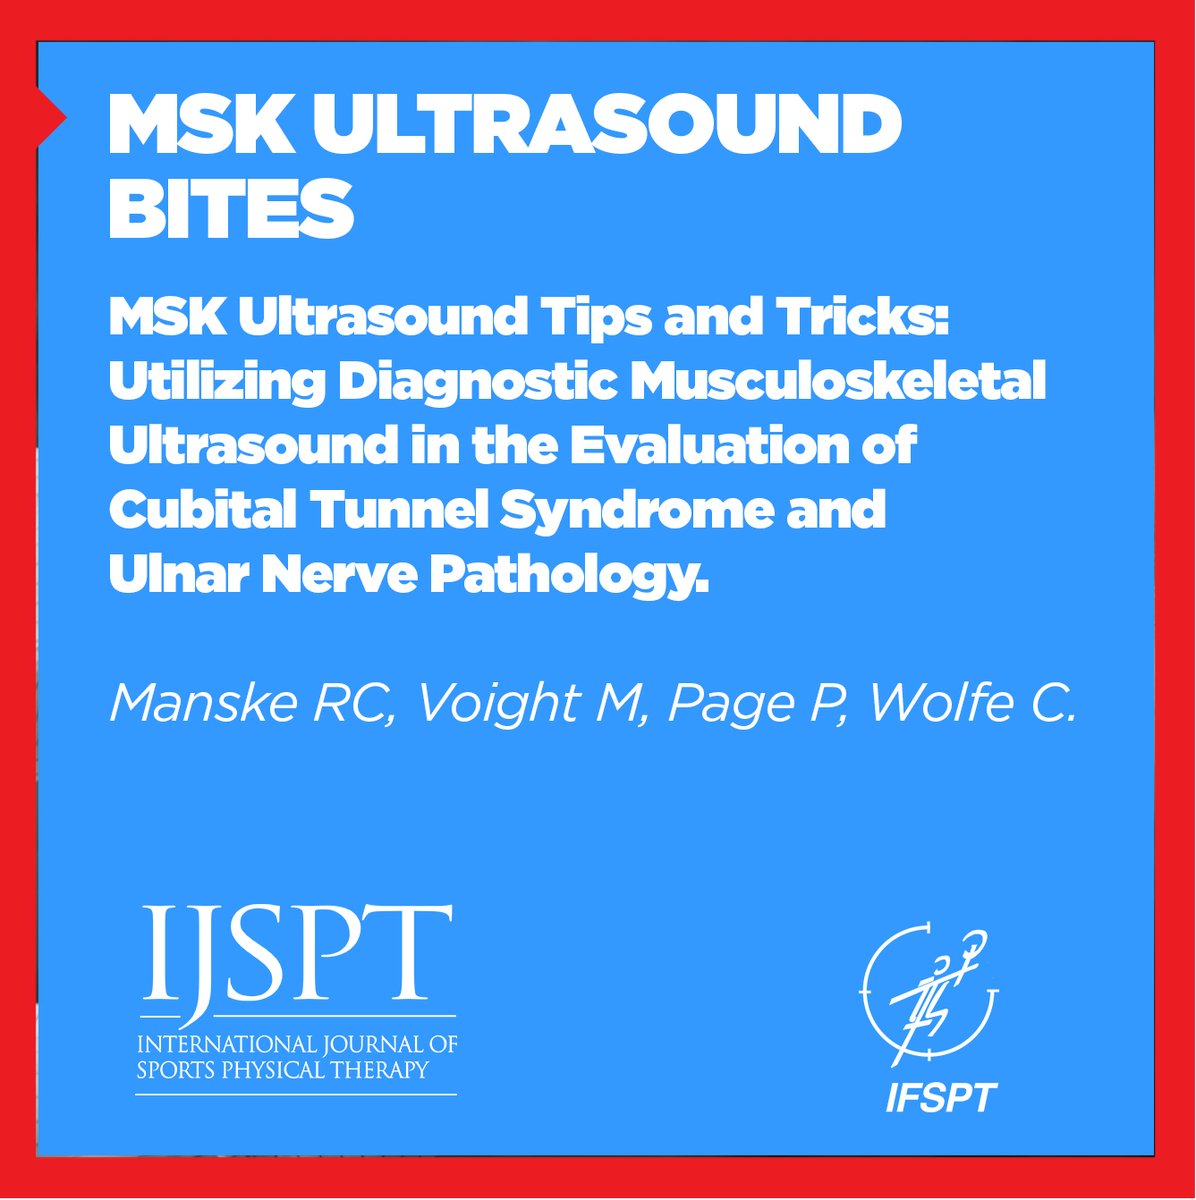 MSK Ultrasound Tips and Tricks: Utilizing Diagnostic Musculoskeletal Ultrasound in the Evaluation of Cubital Tunnel Syndrome and Ulnar Nerve Pathology. ijspt.org/utilizing-diag…